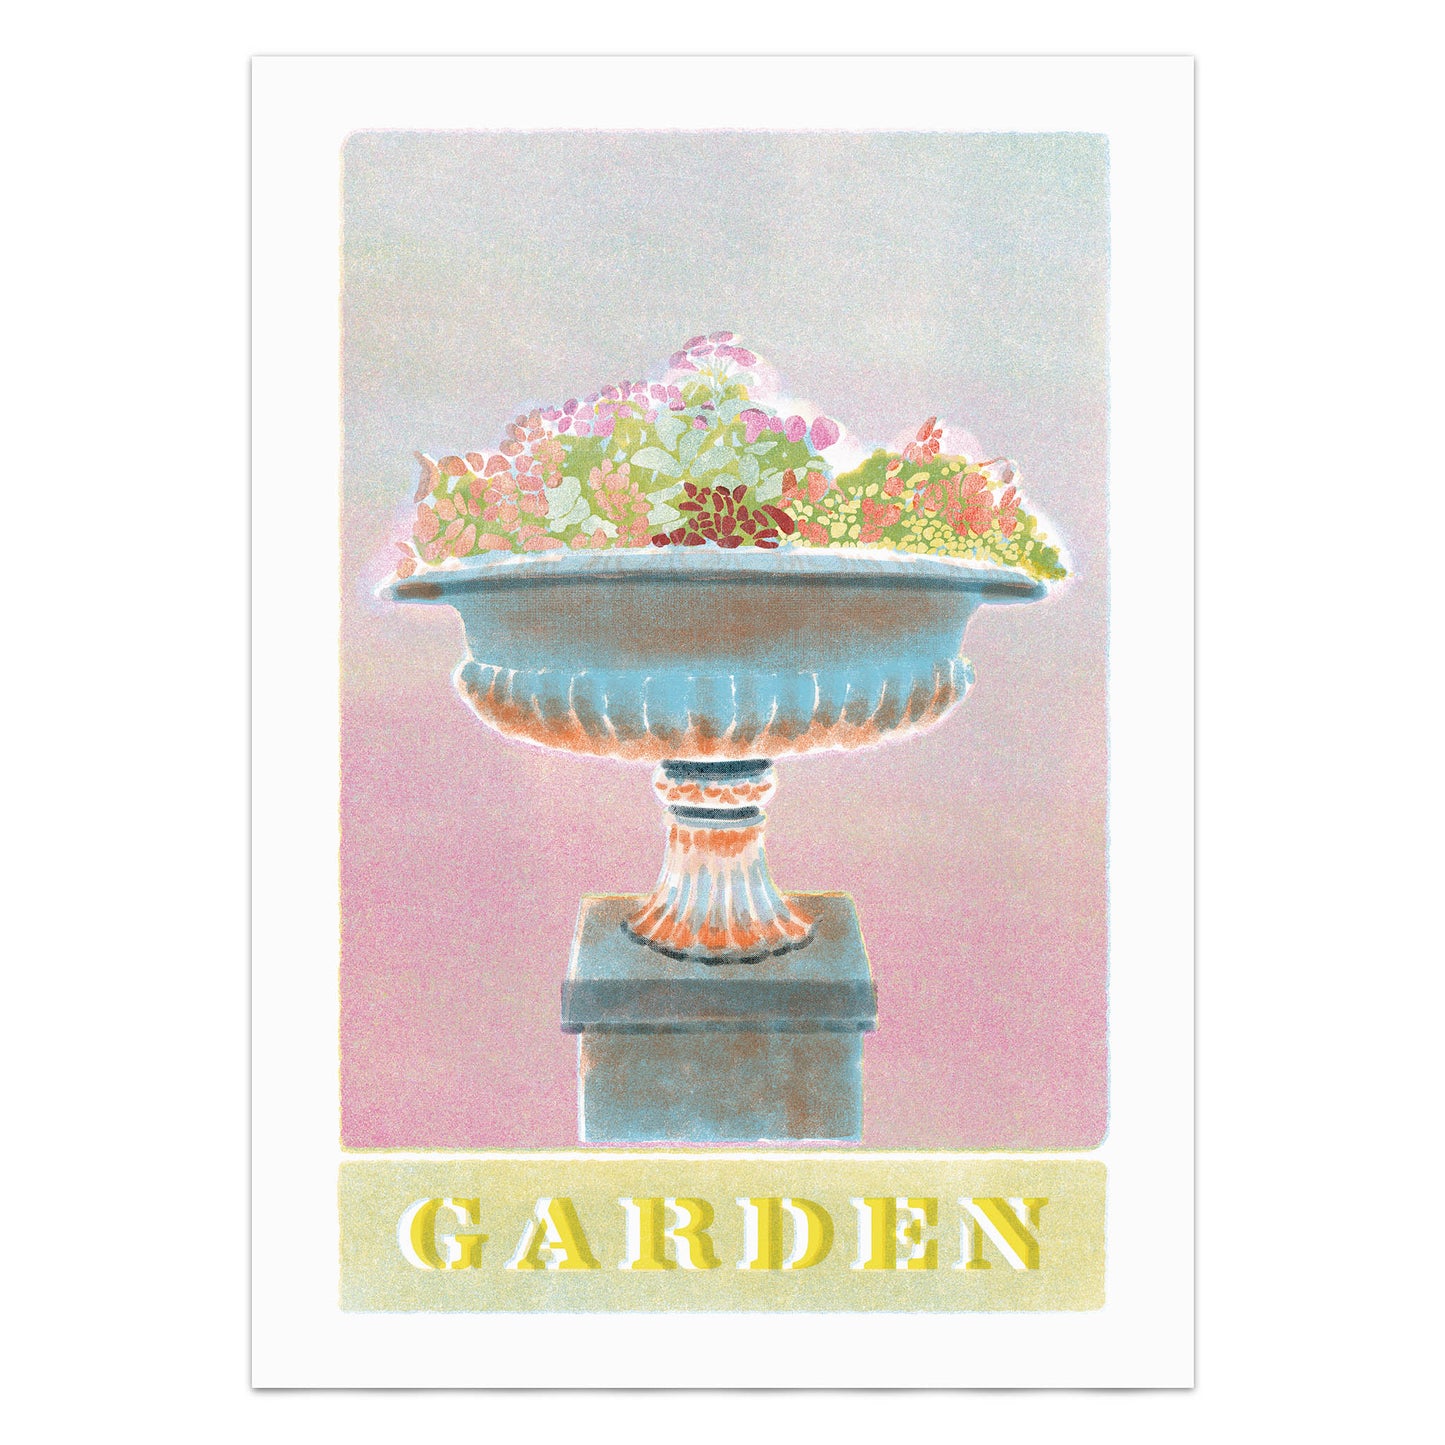 Garden risograph style fine art print